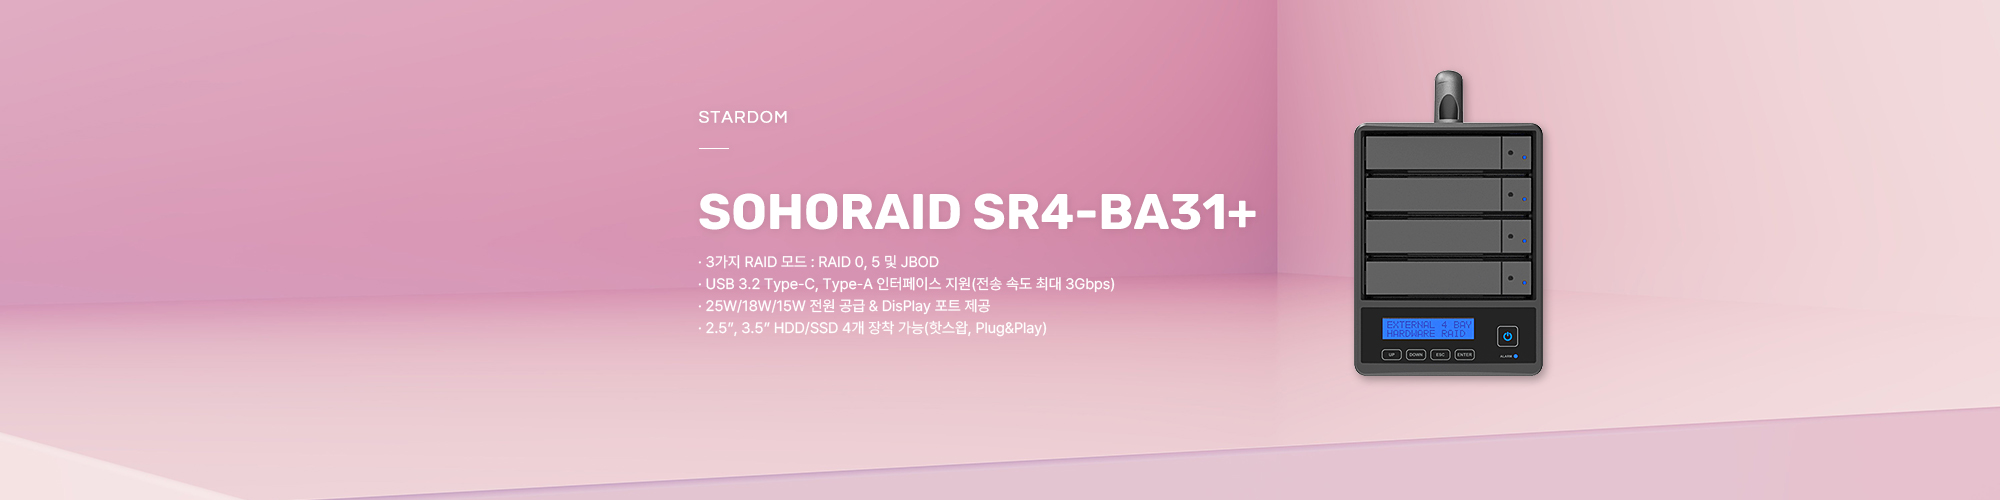 USB 3.2 4베이 외장스토리지, SOHORAID SR4-BA31+ 제품 보러가기